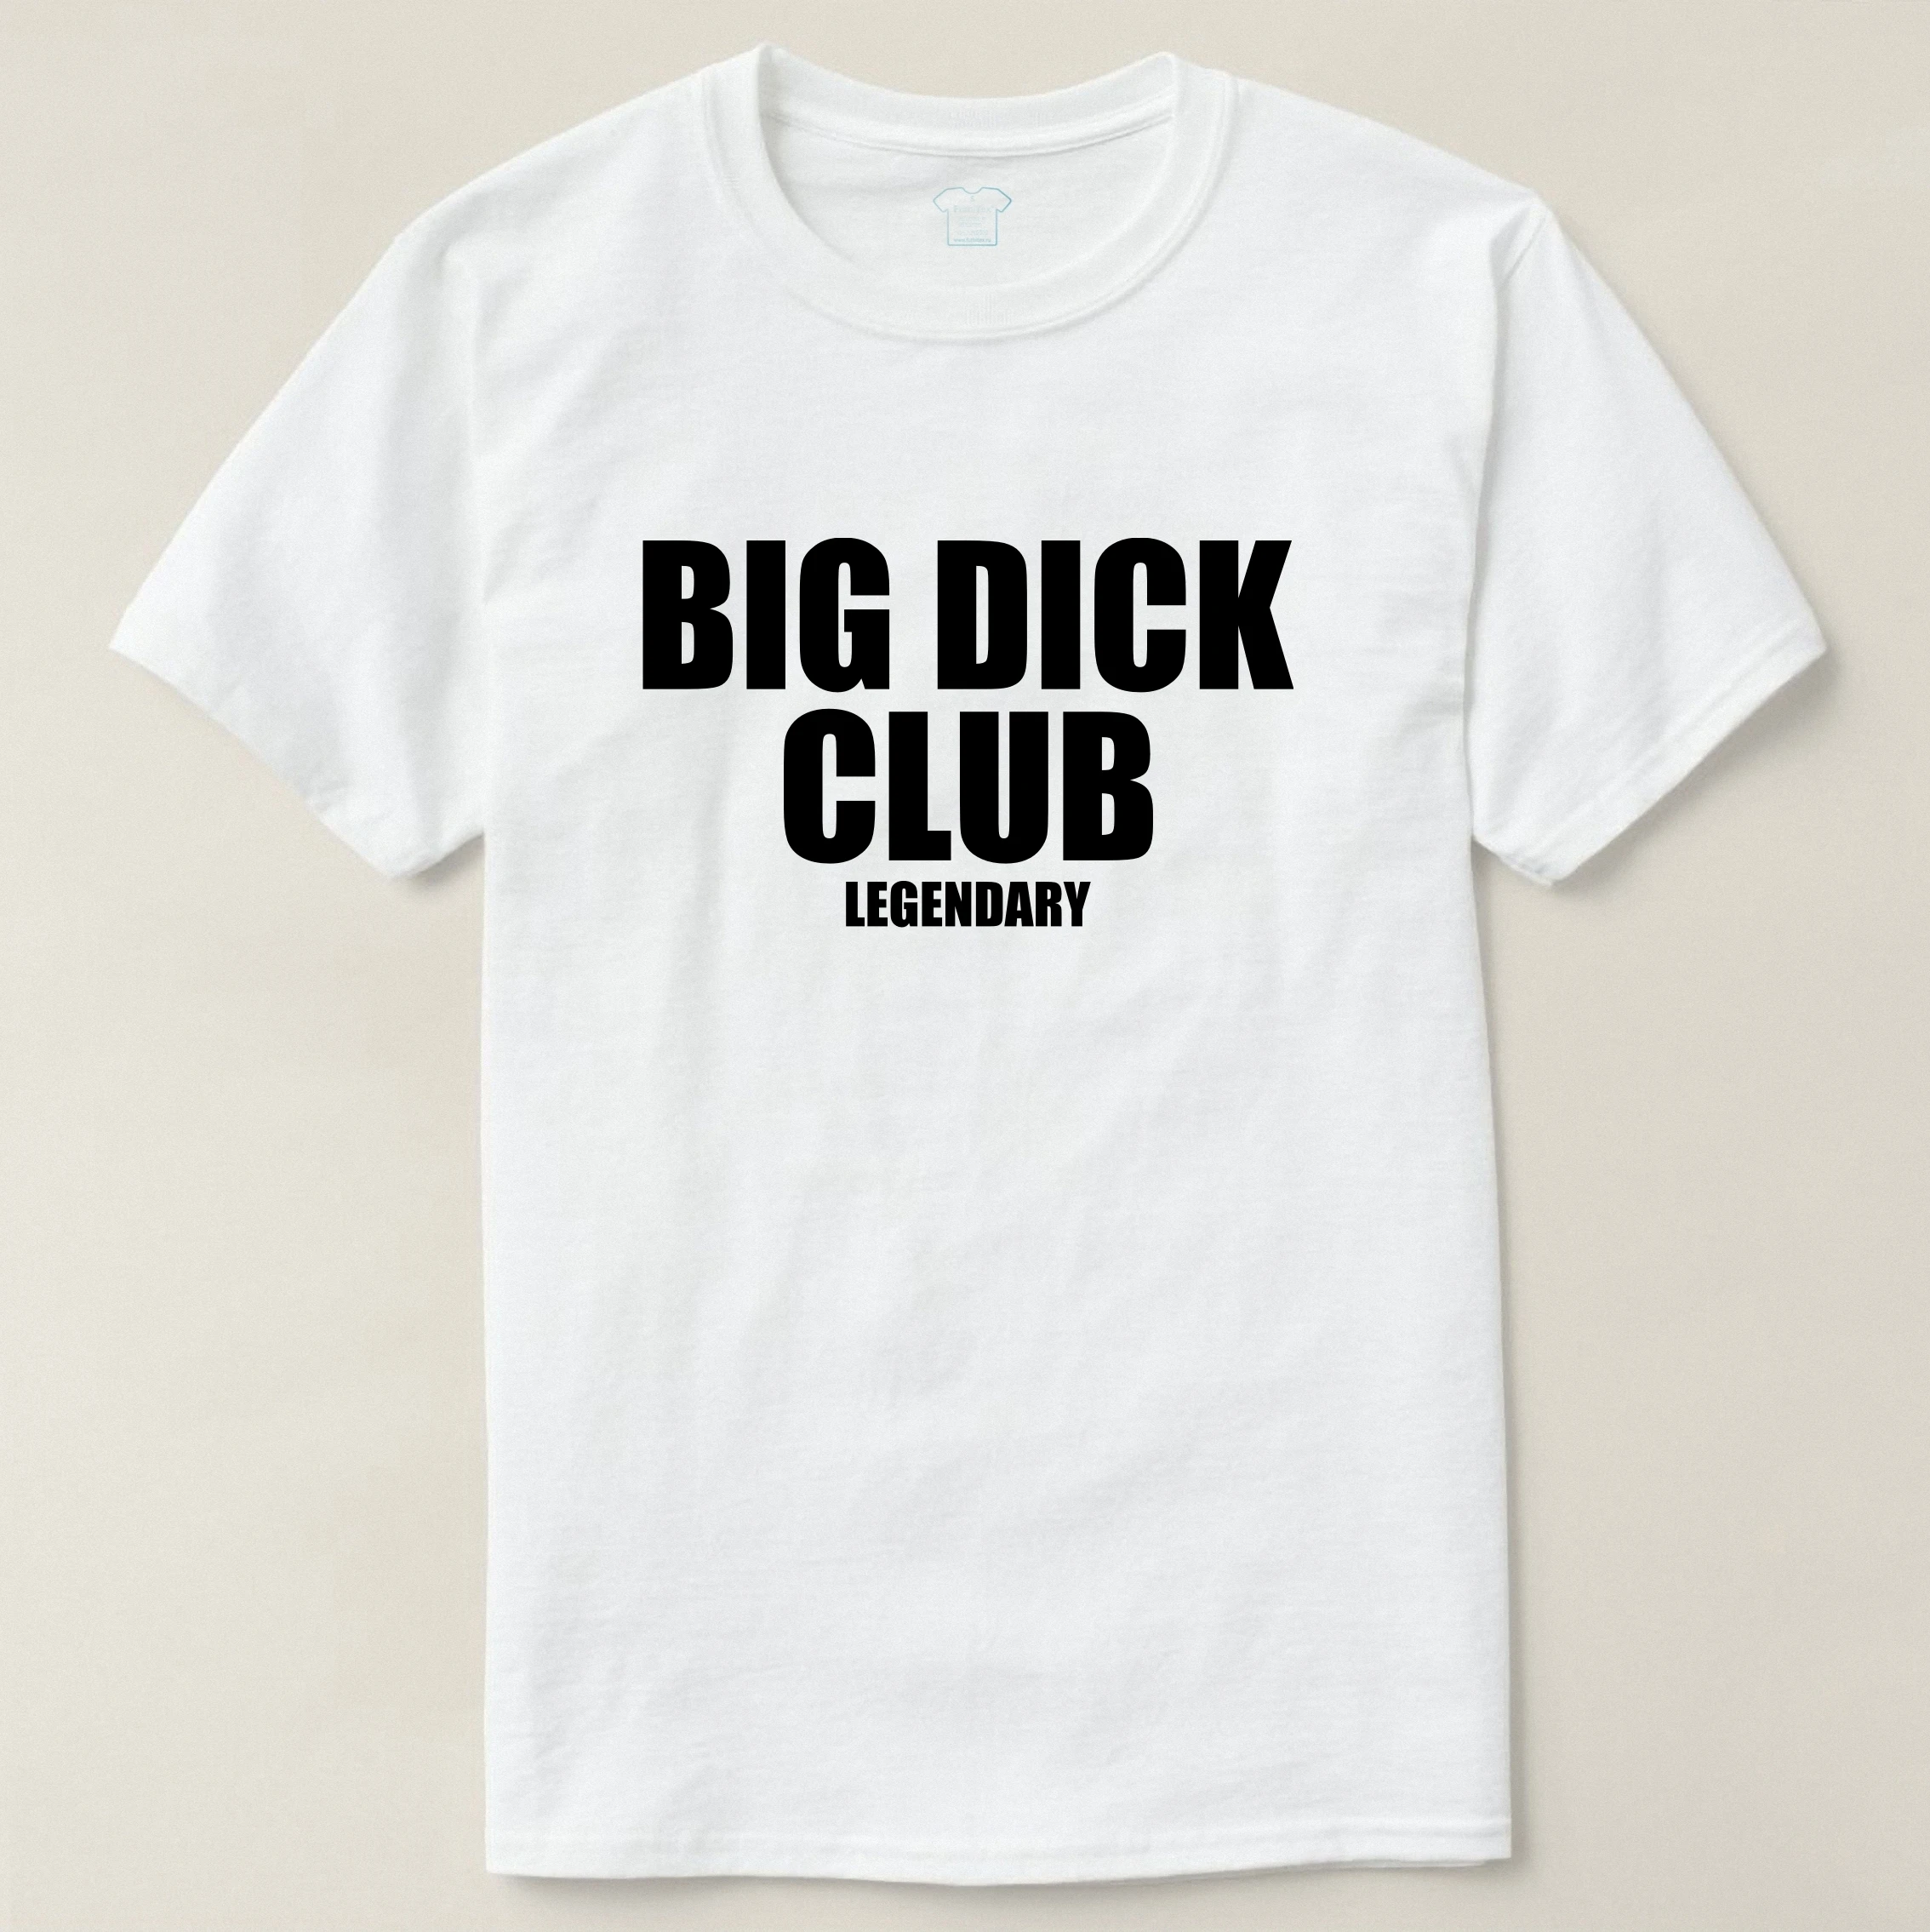 austin scurlock recommends the big dick club pic